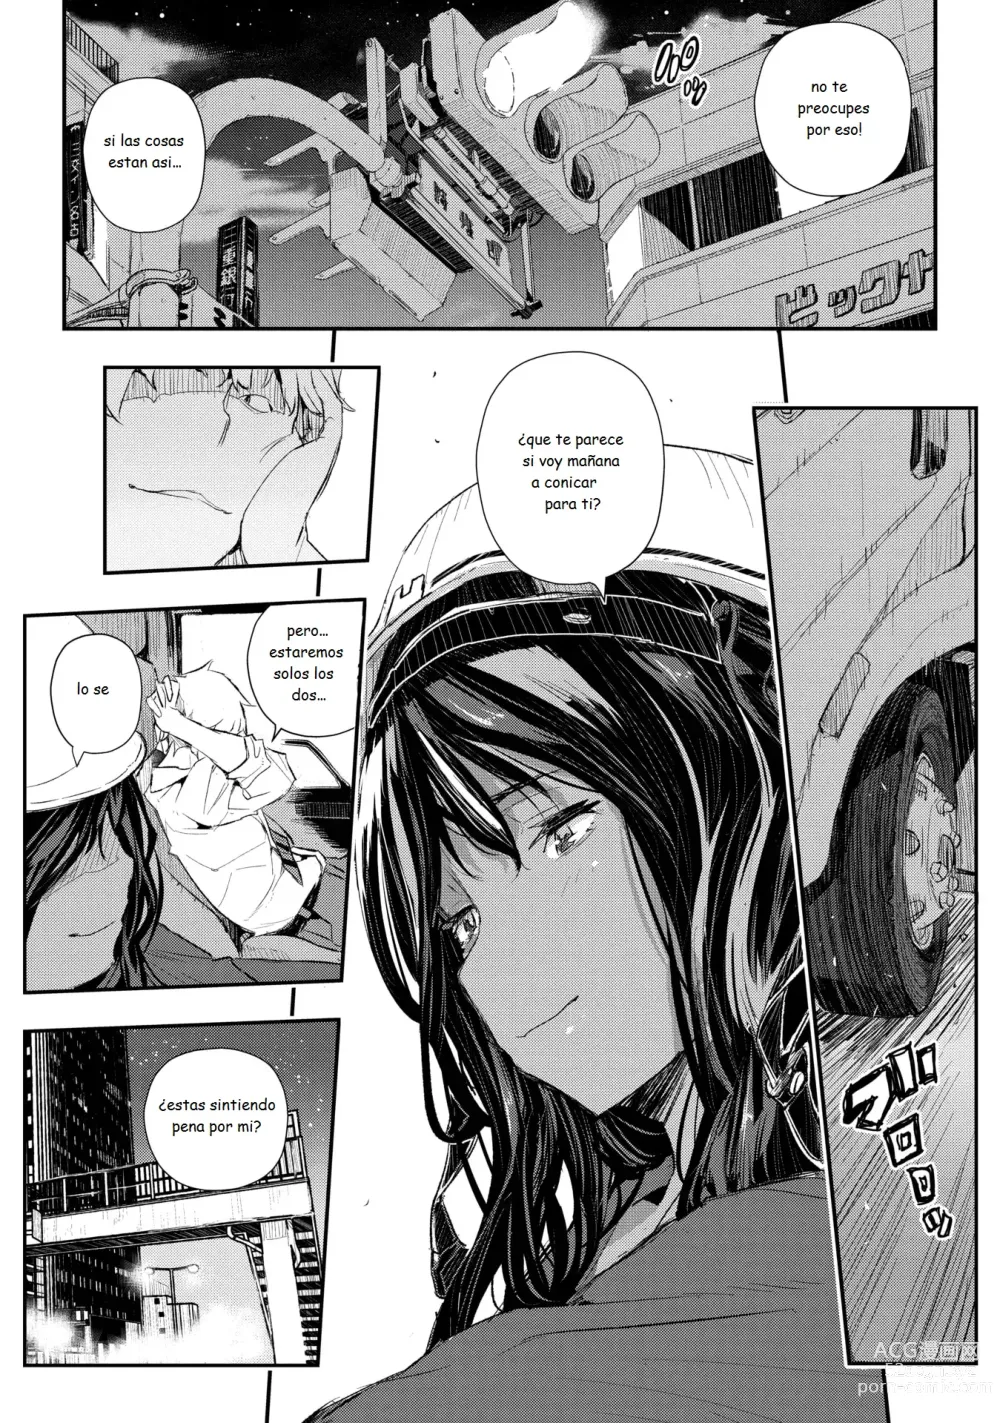 Page 9 of manga Hairan Yu-gi